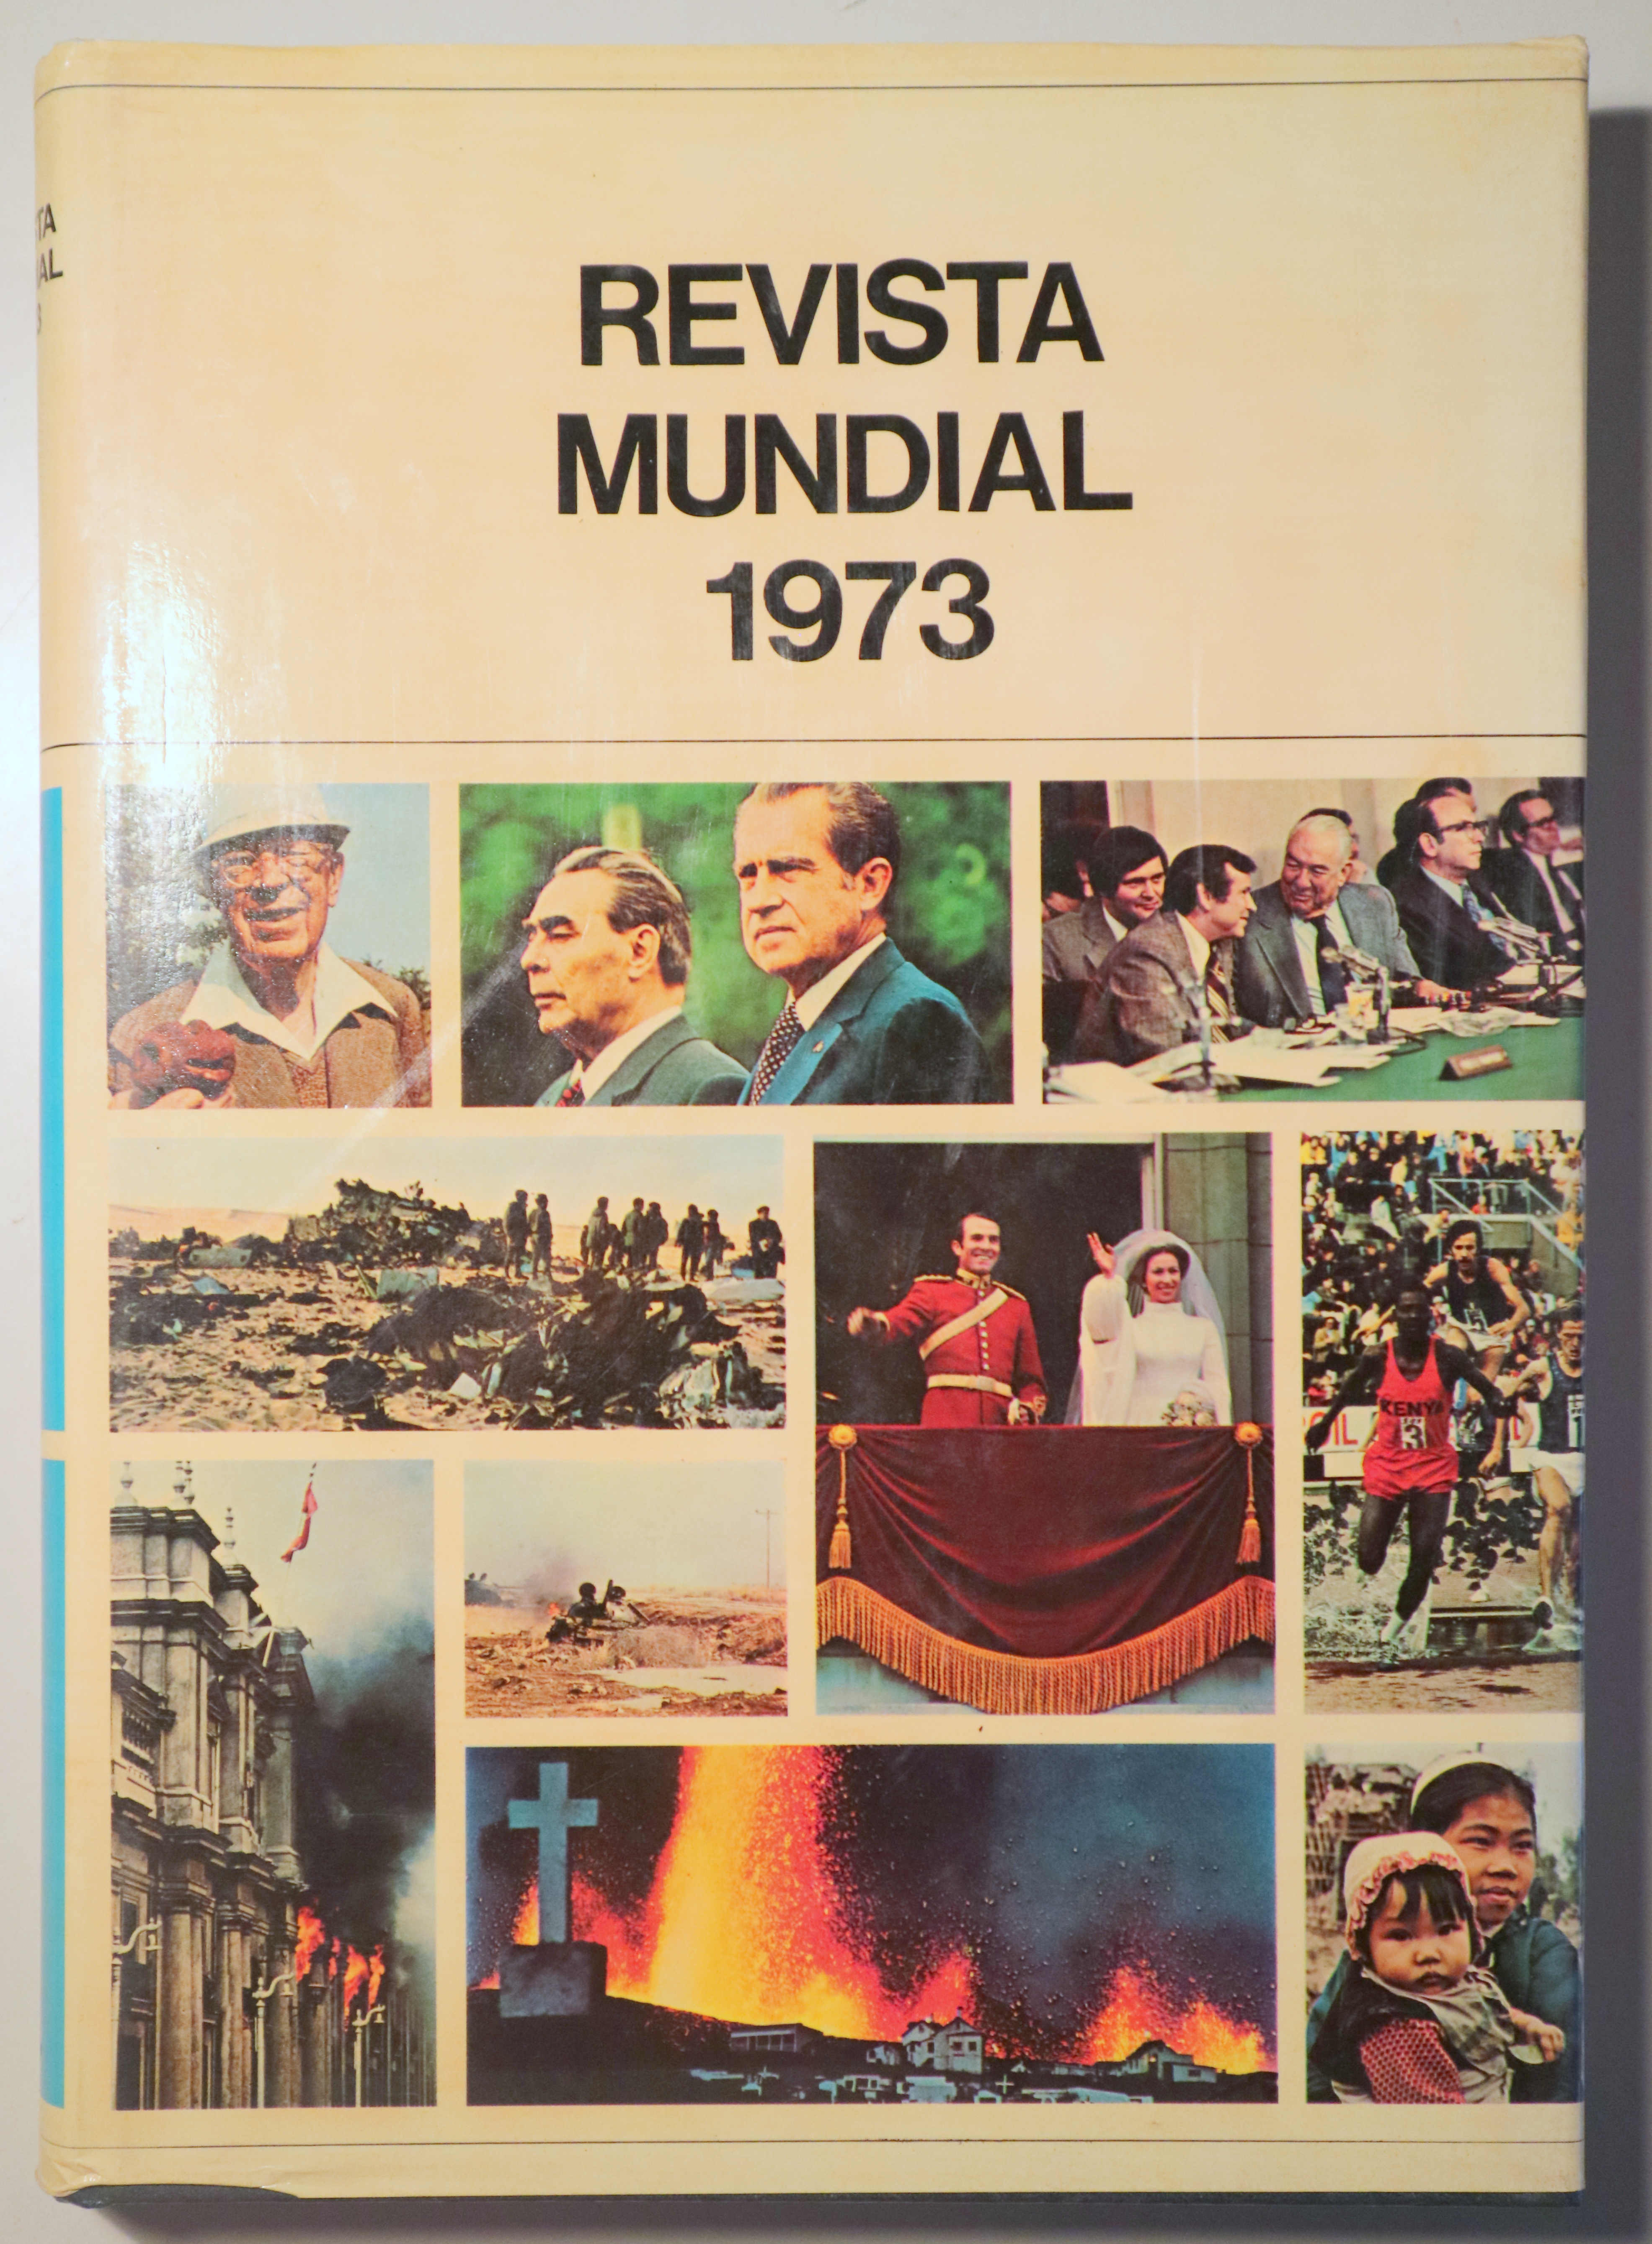 REVISTA MUNDIAL 1973 - Barcelona 1974 - Muy ilustrado